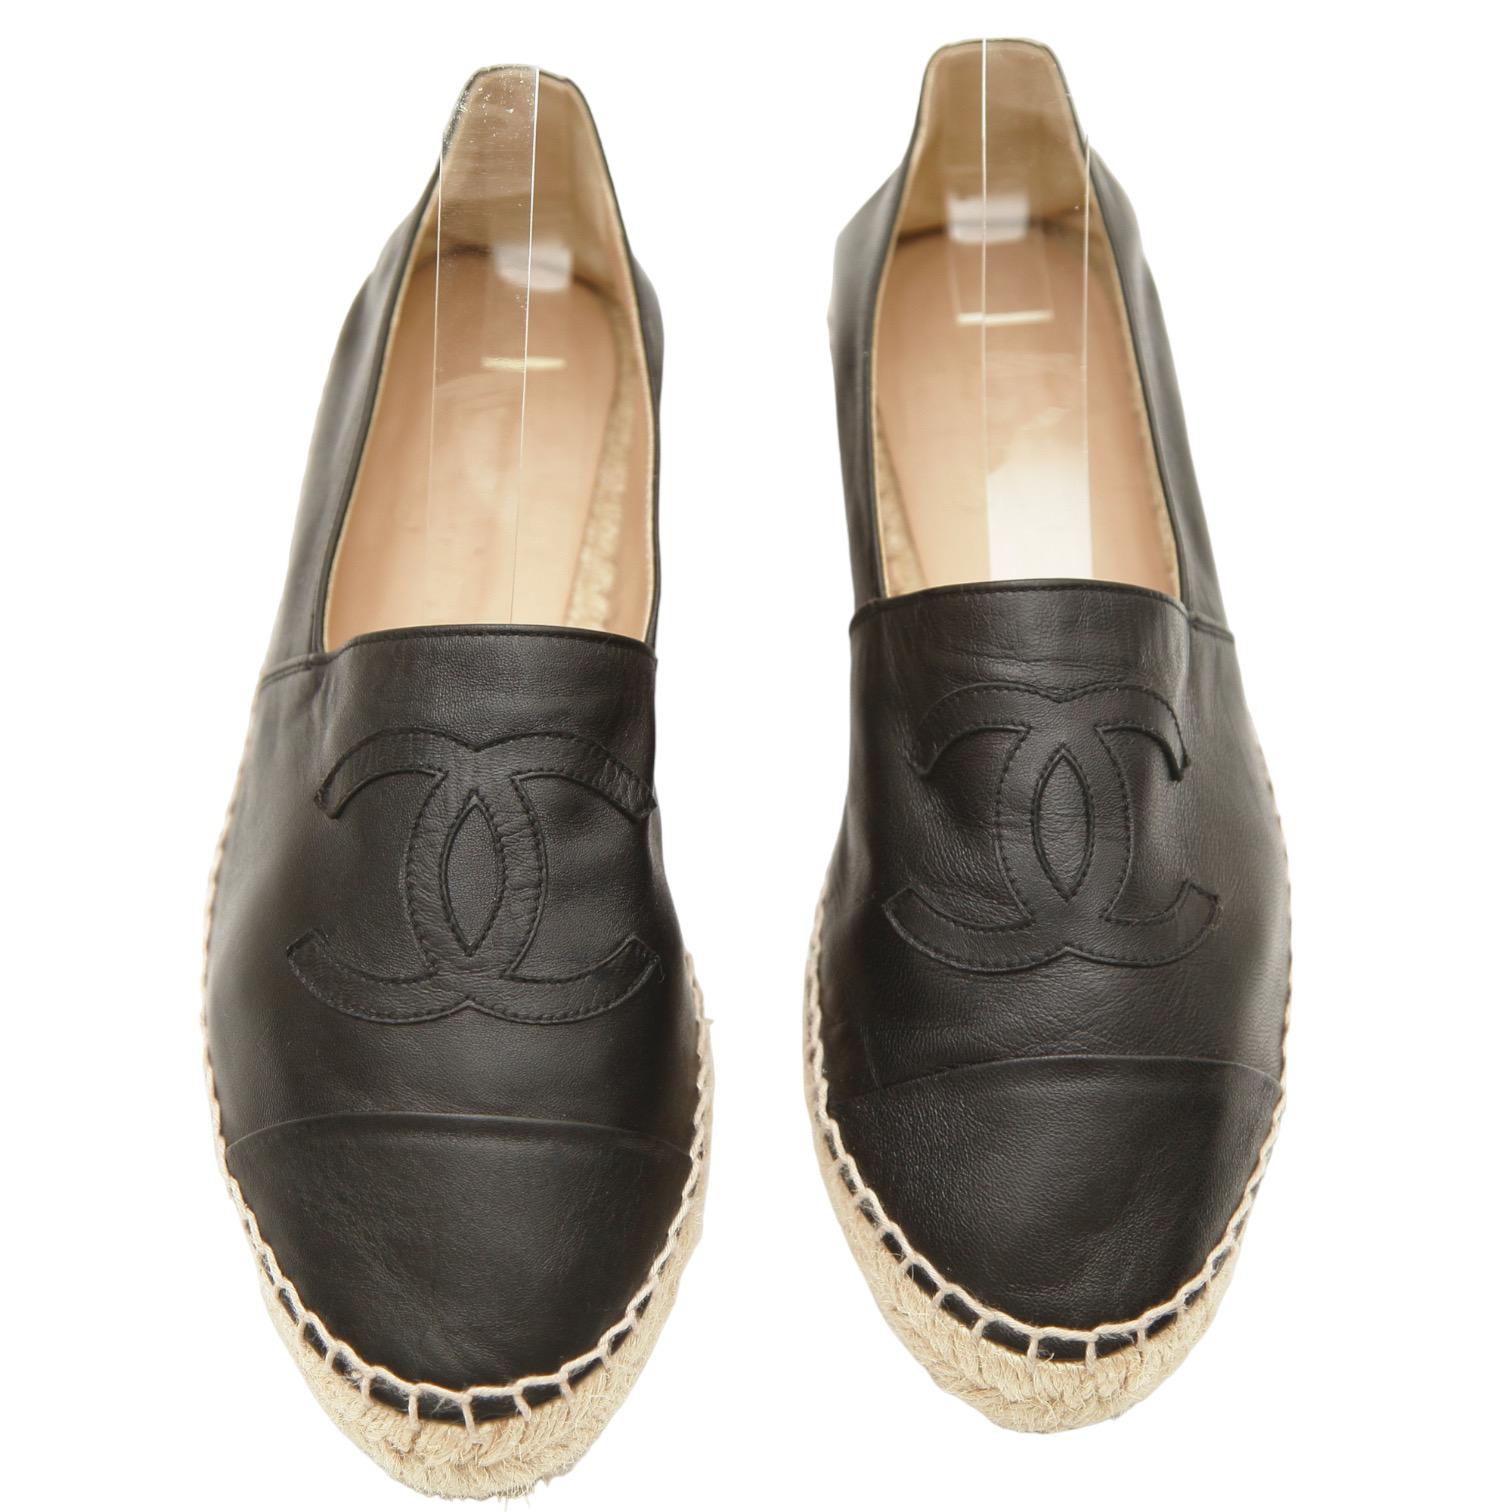 CHANEL Black Lambskin Leather Espadrilles Loafers Flats Cap Toe CC Shoes Sz 40 1